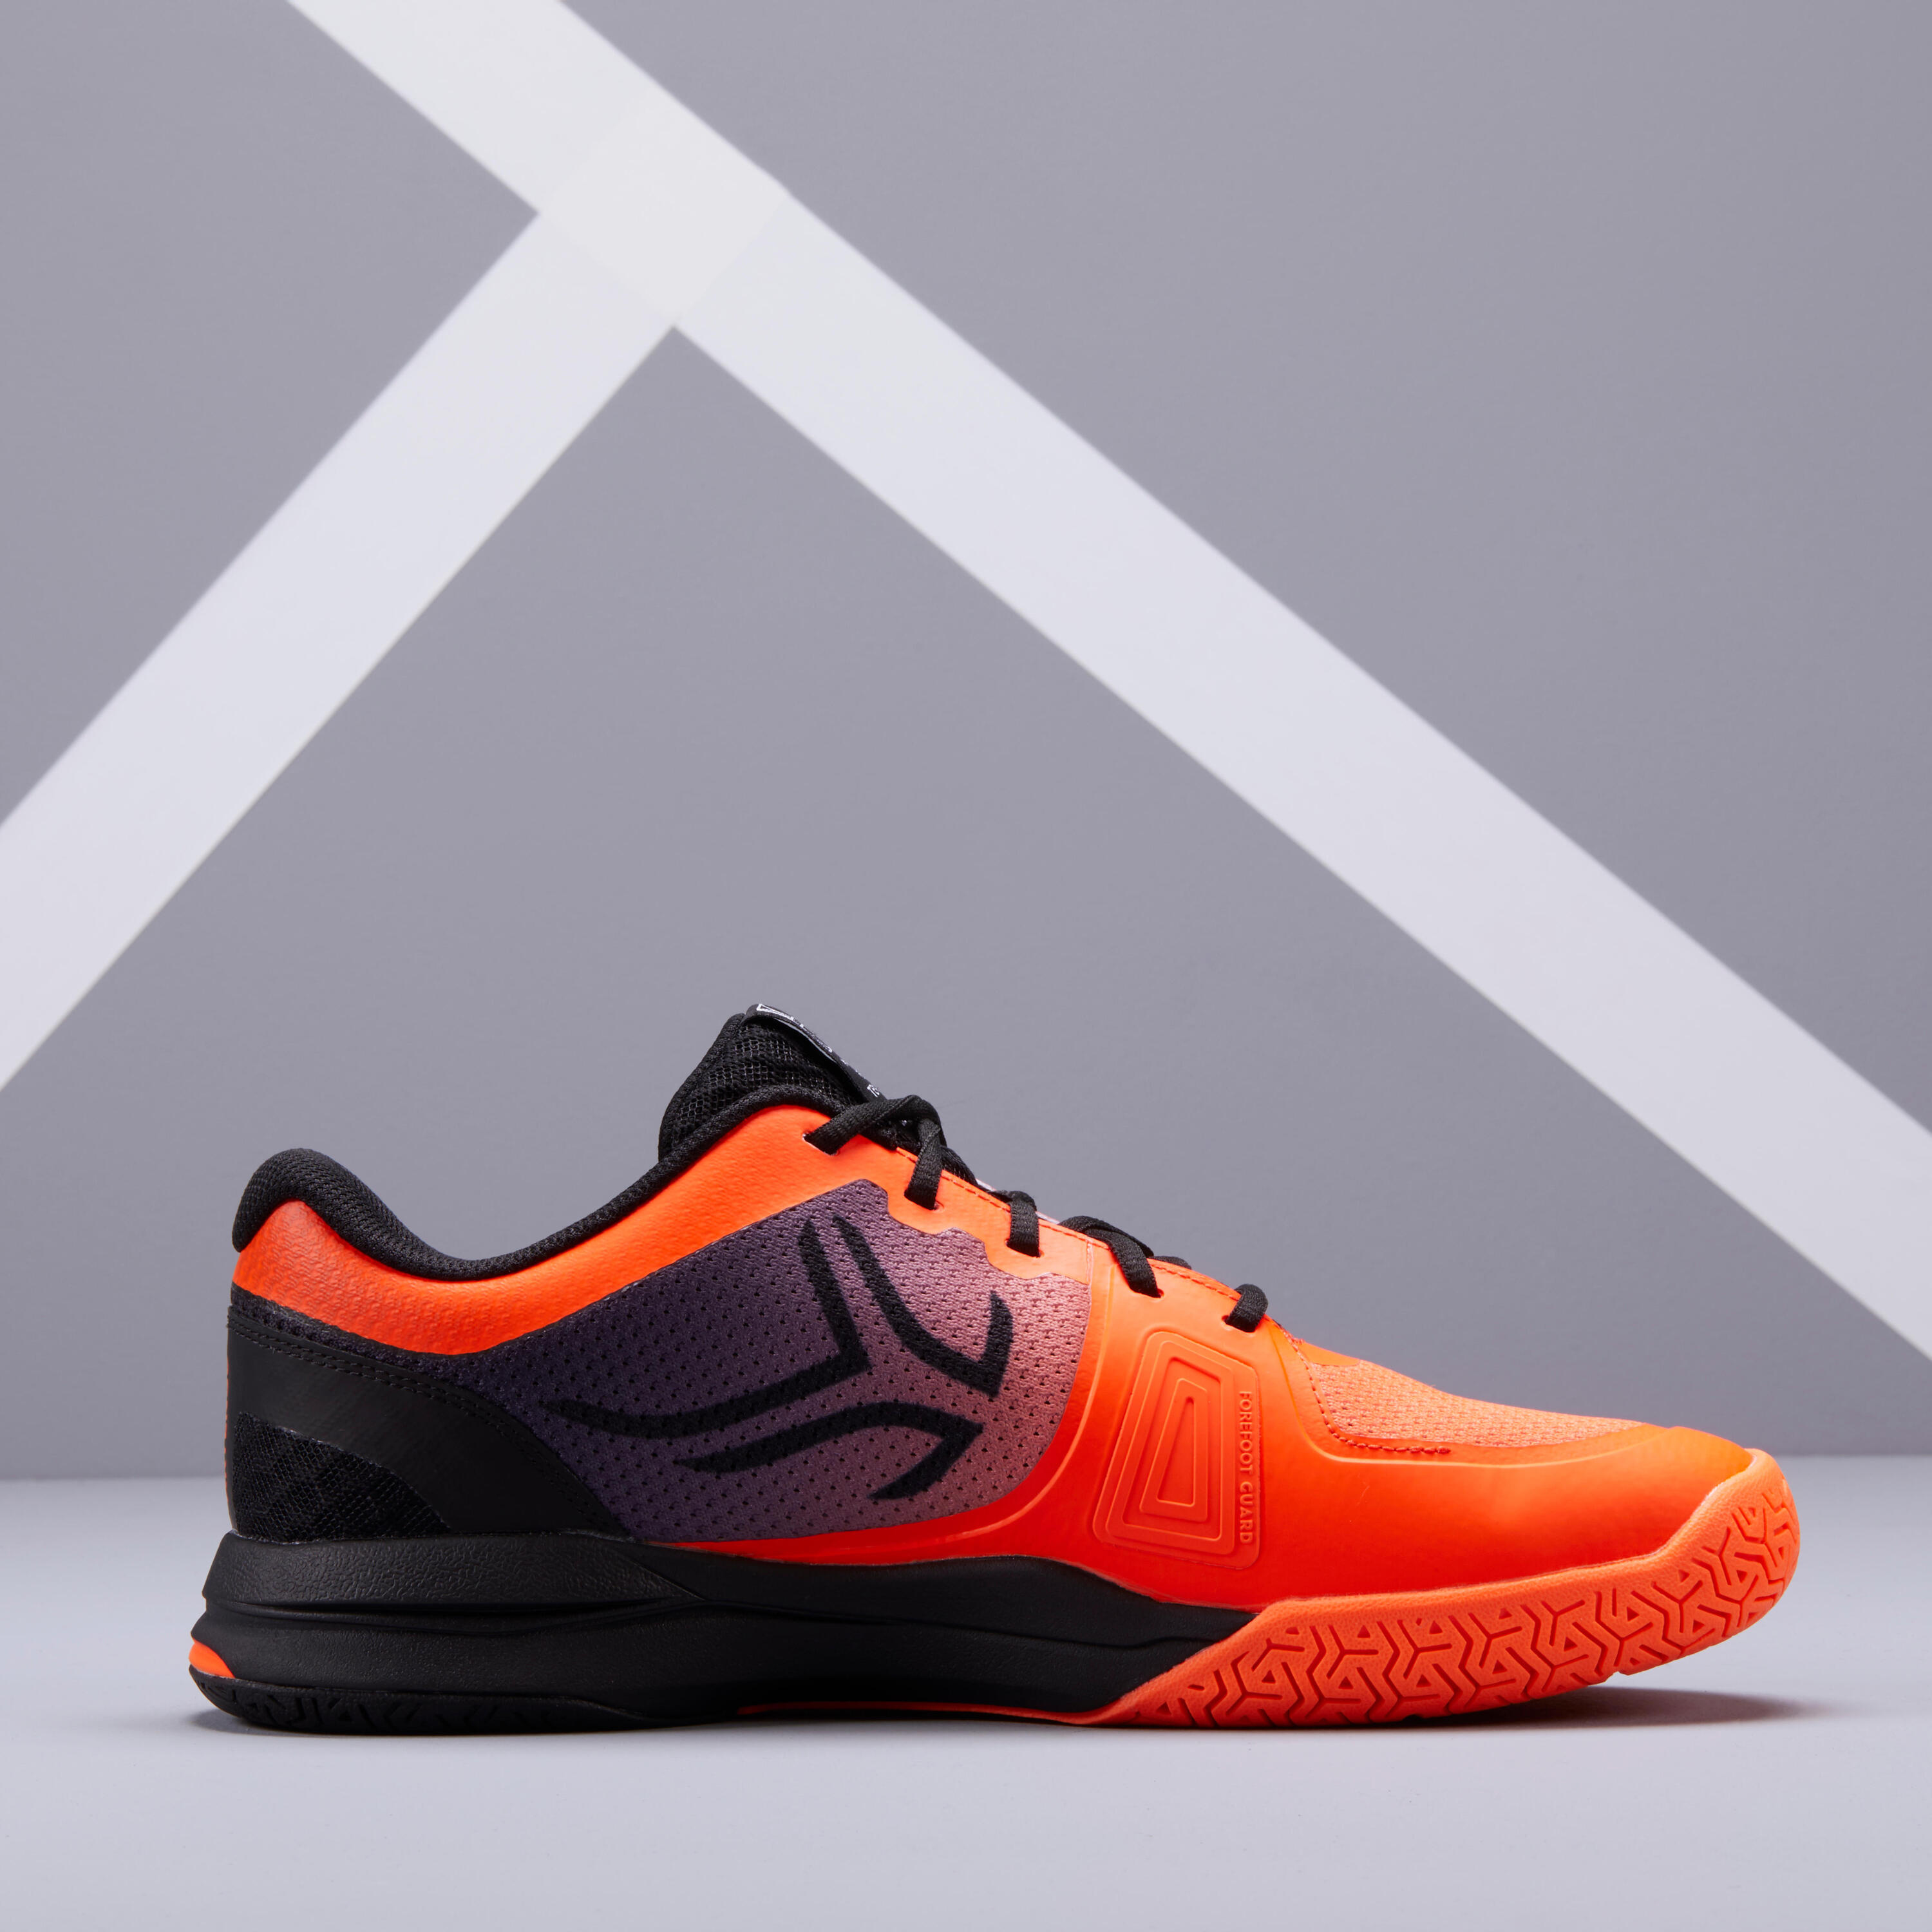 Men's Multi-Court Tennis Shoes TS590 - Orange/Black 2/9